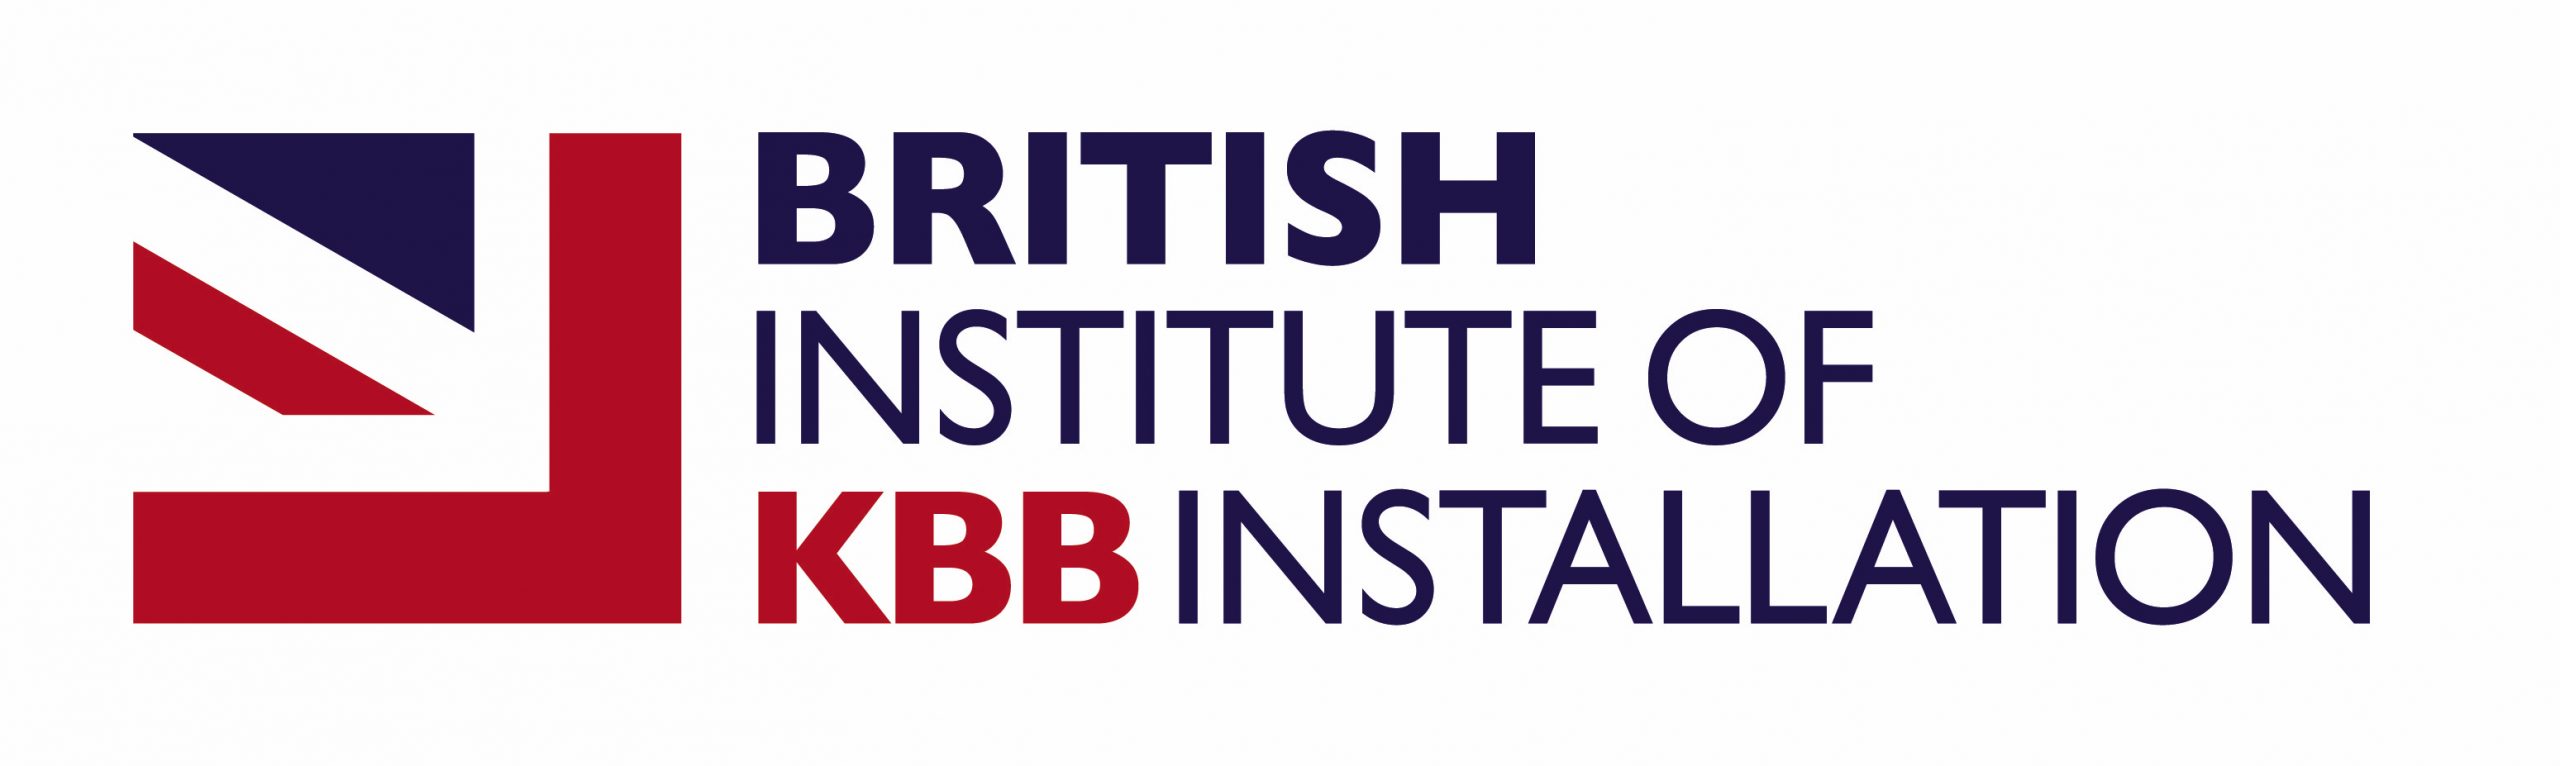 Huge initiative to address KBB skills crisis unveiled by BiKBBI